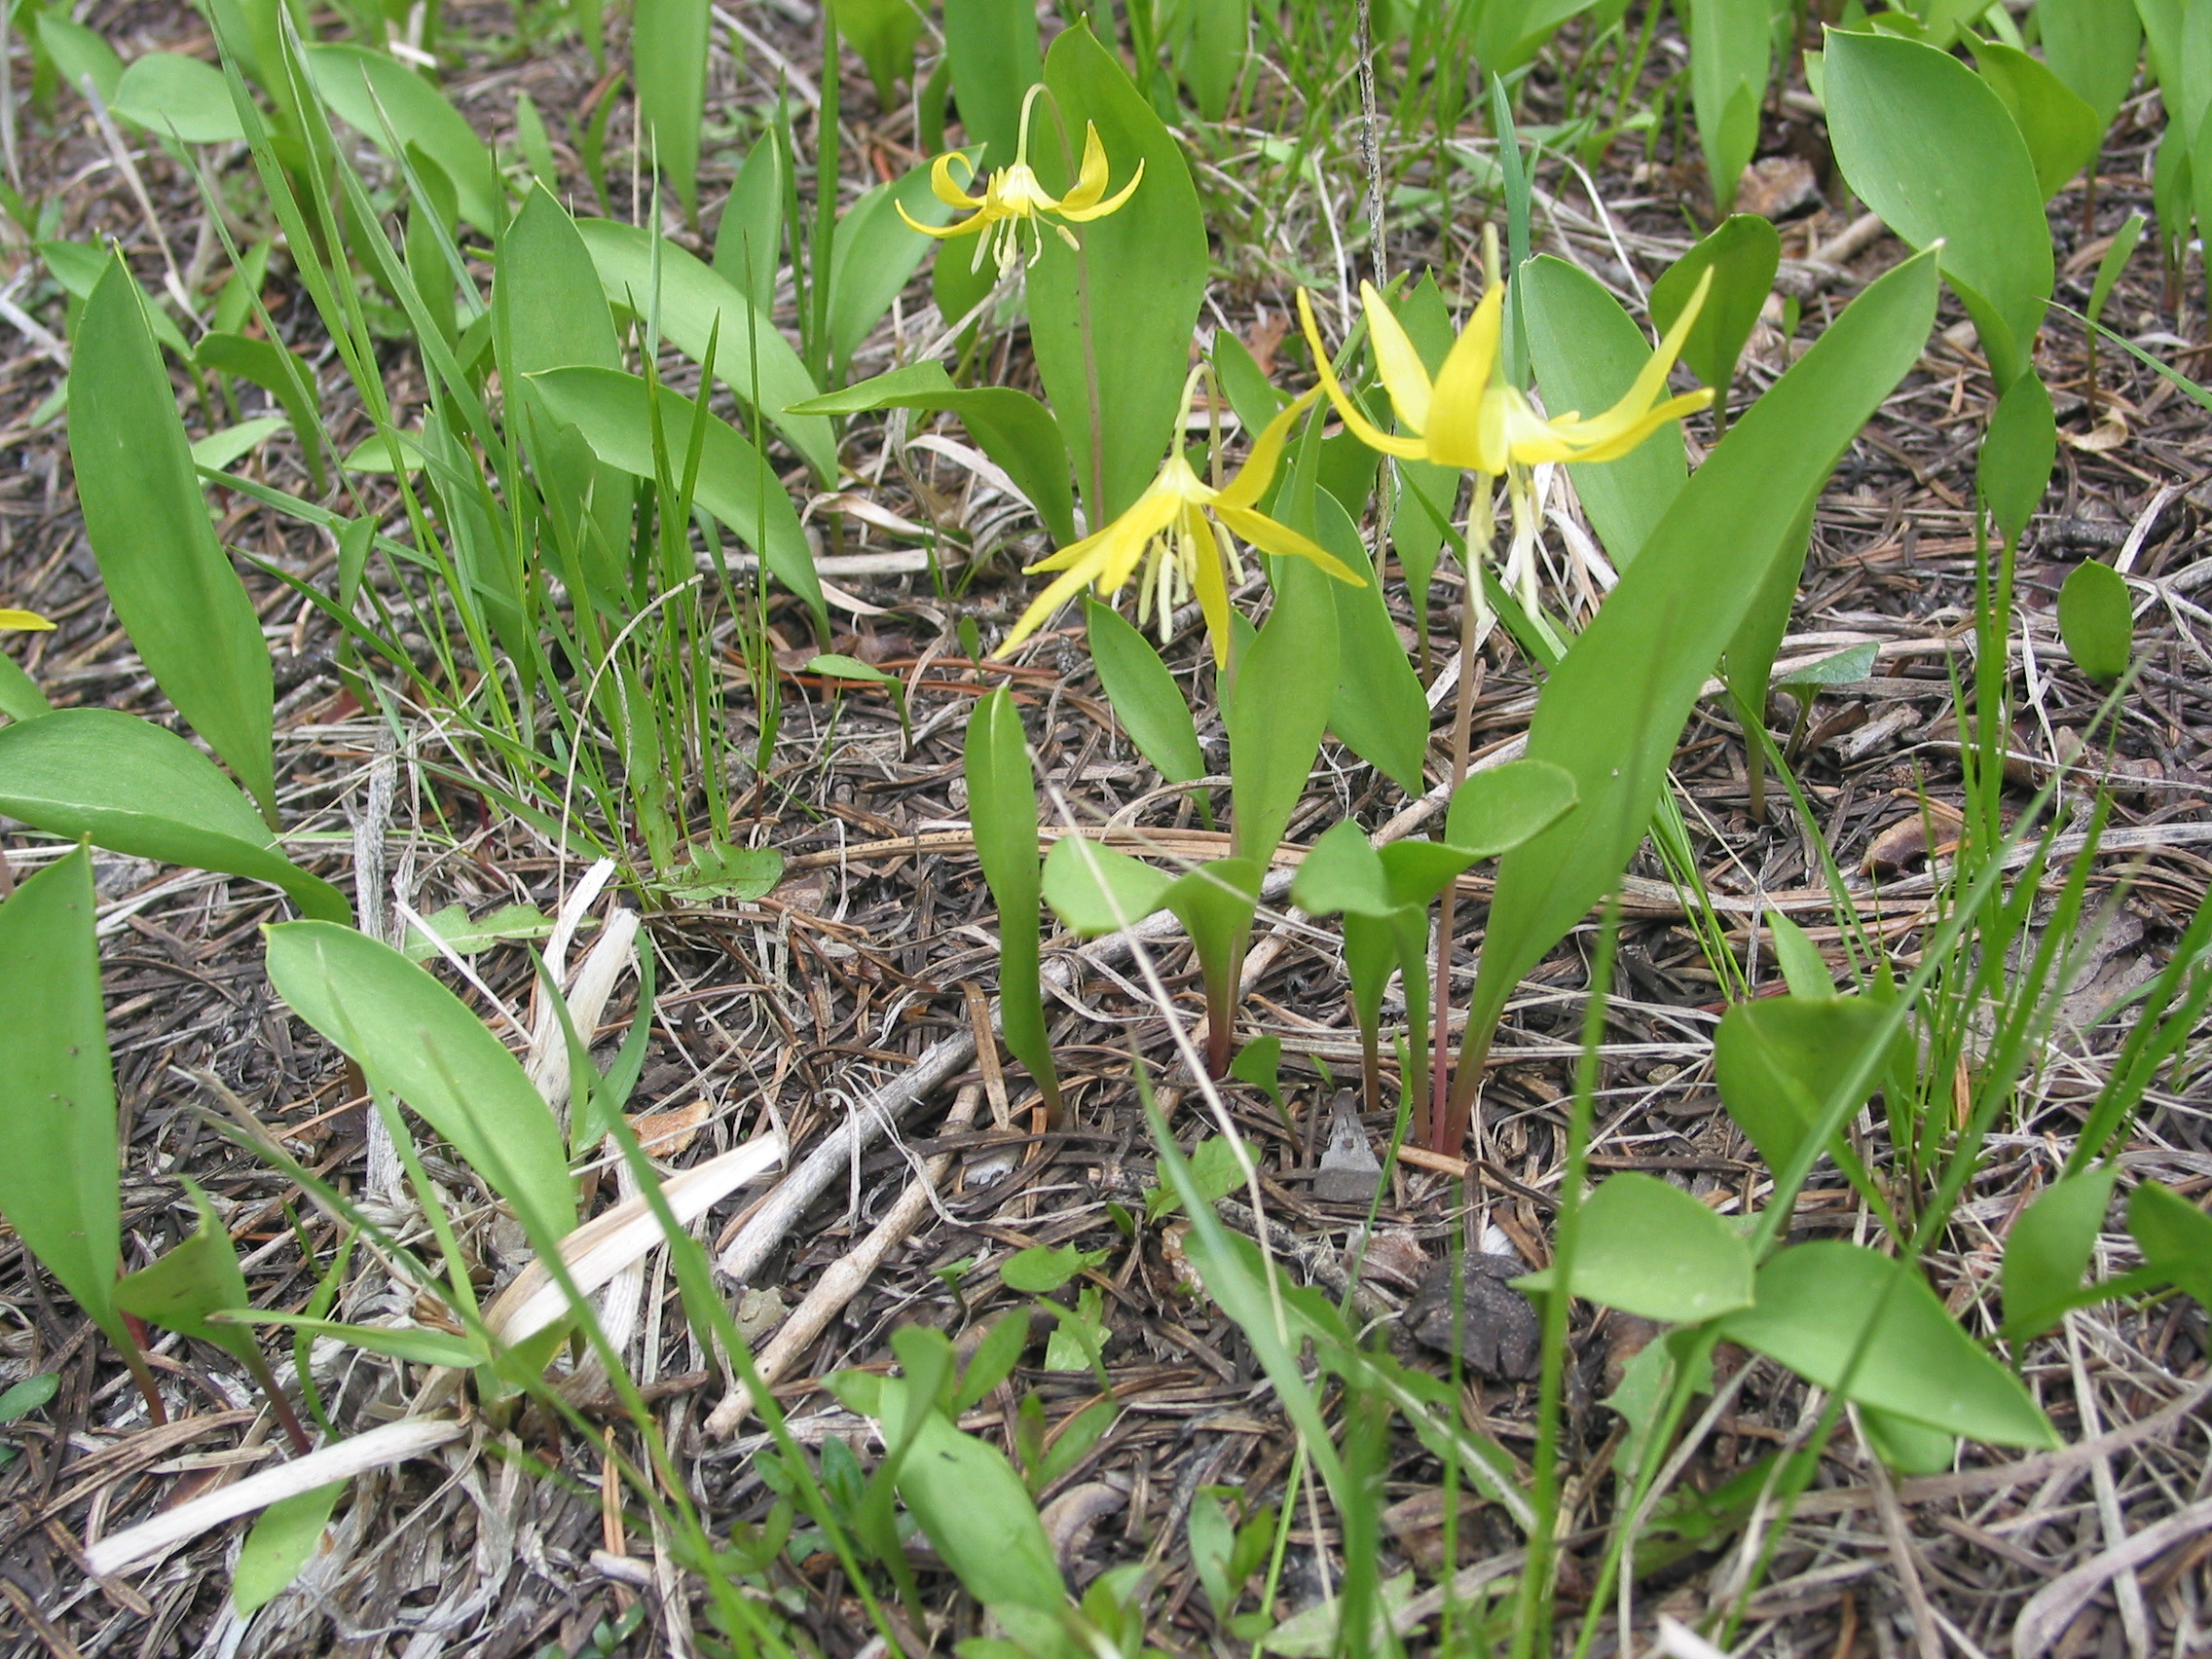 Glacier Lily (Erythronium grandiflorum)

